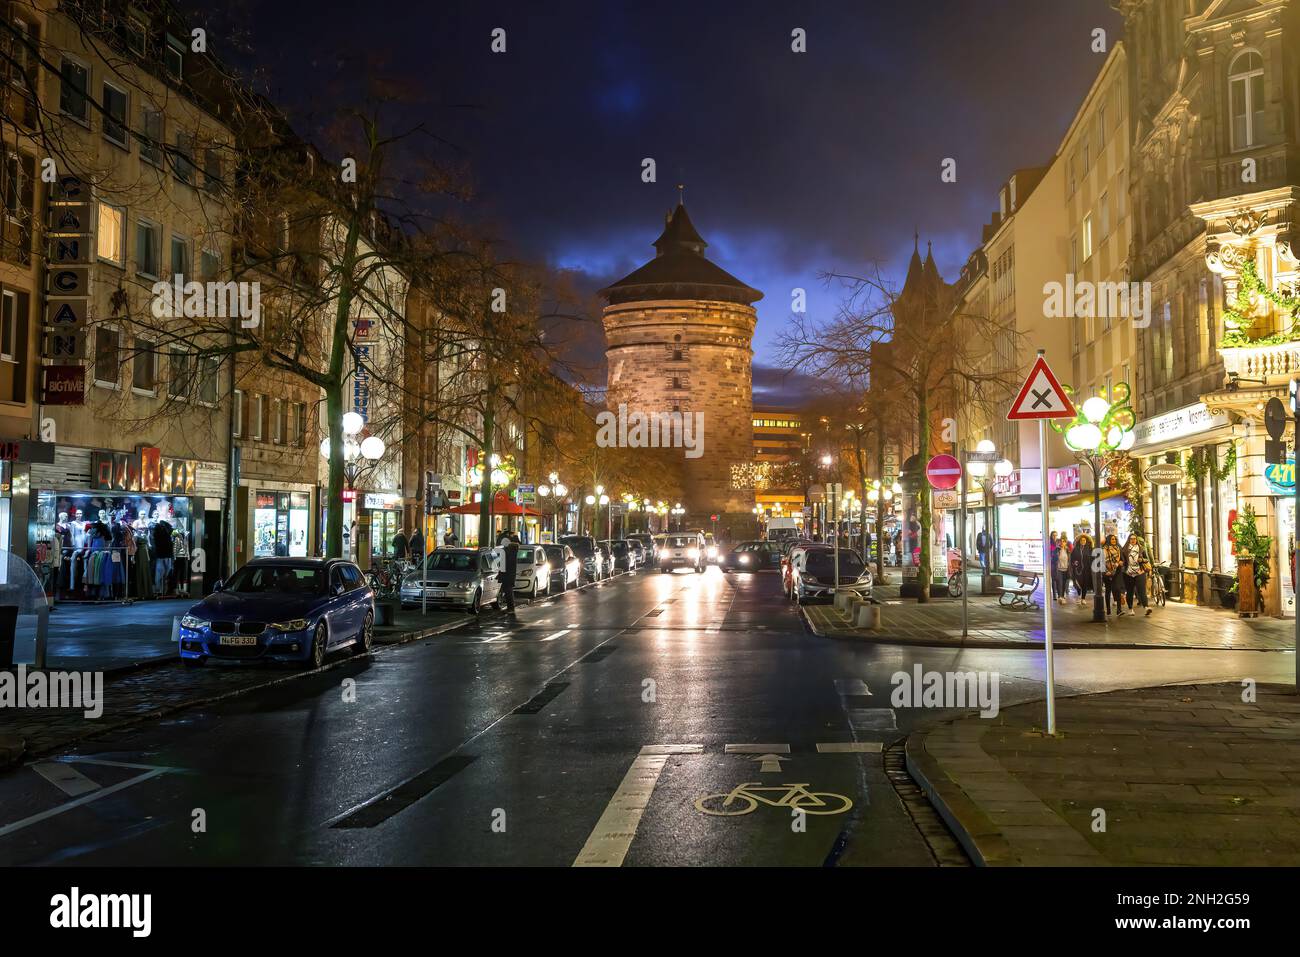 Street and Spittlertorturm Tower at night - Nuremberg, Bavaria, Germany Stock Photo